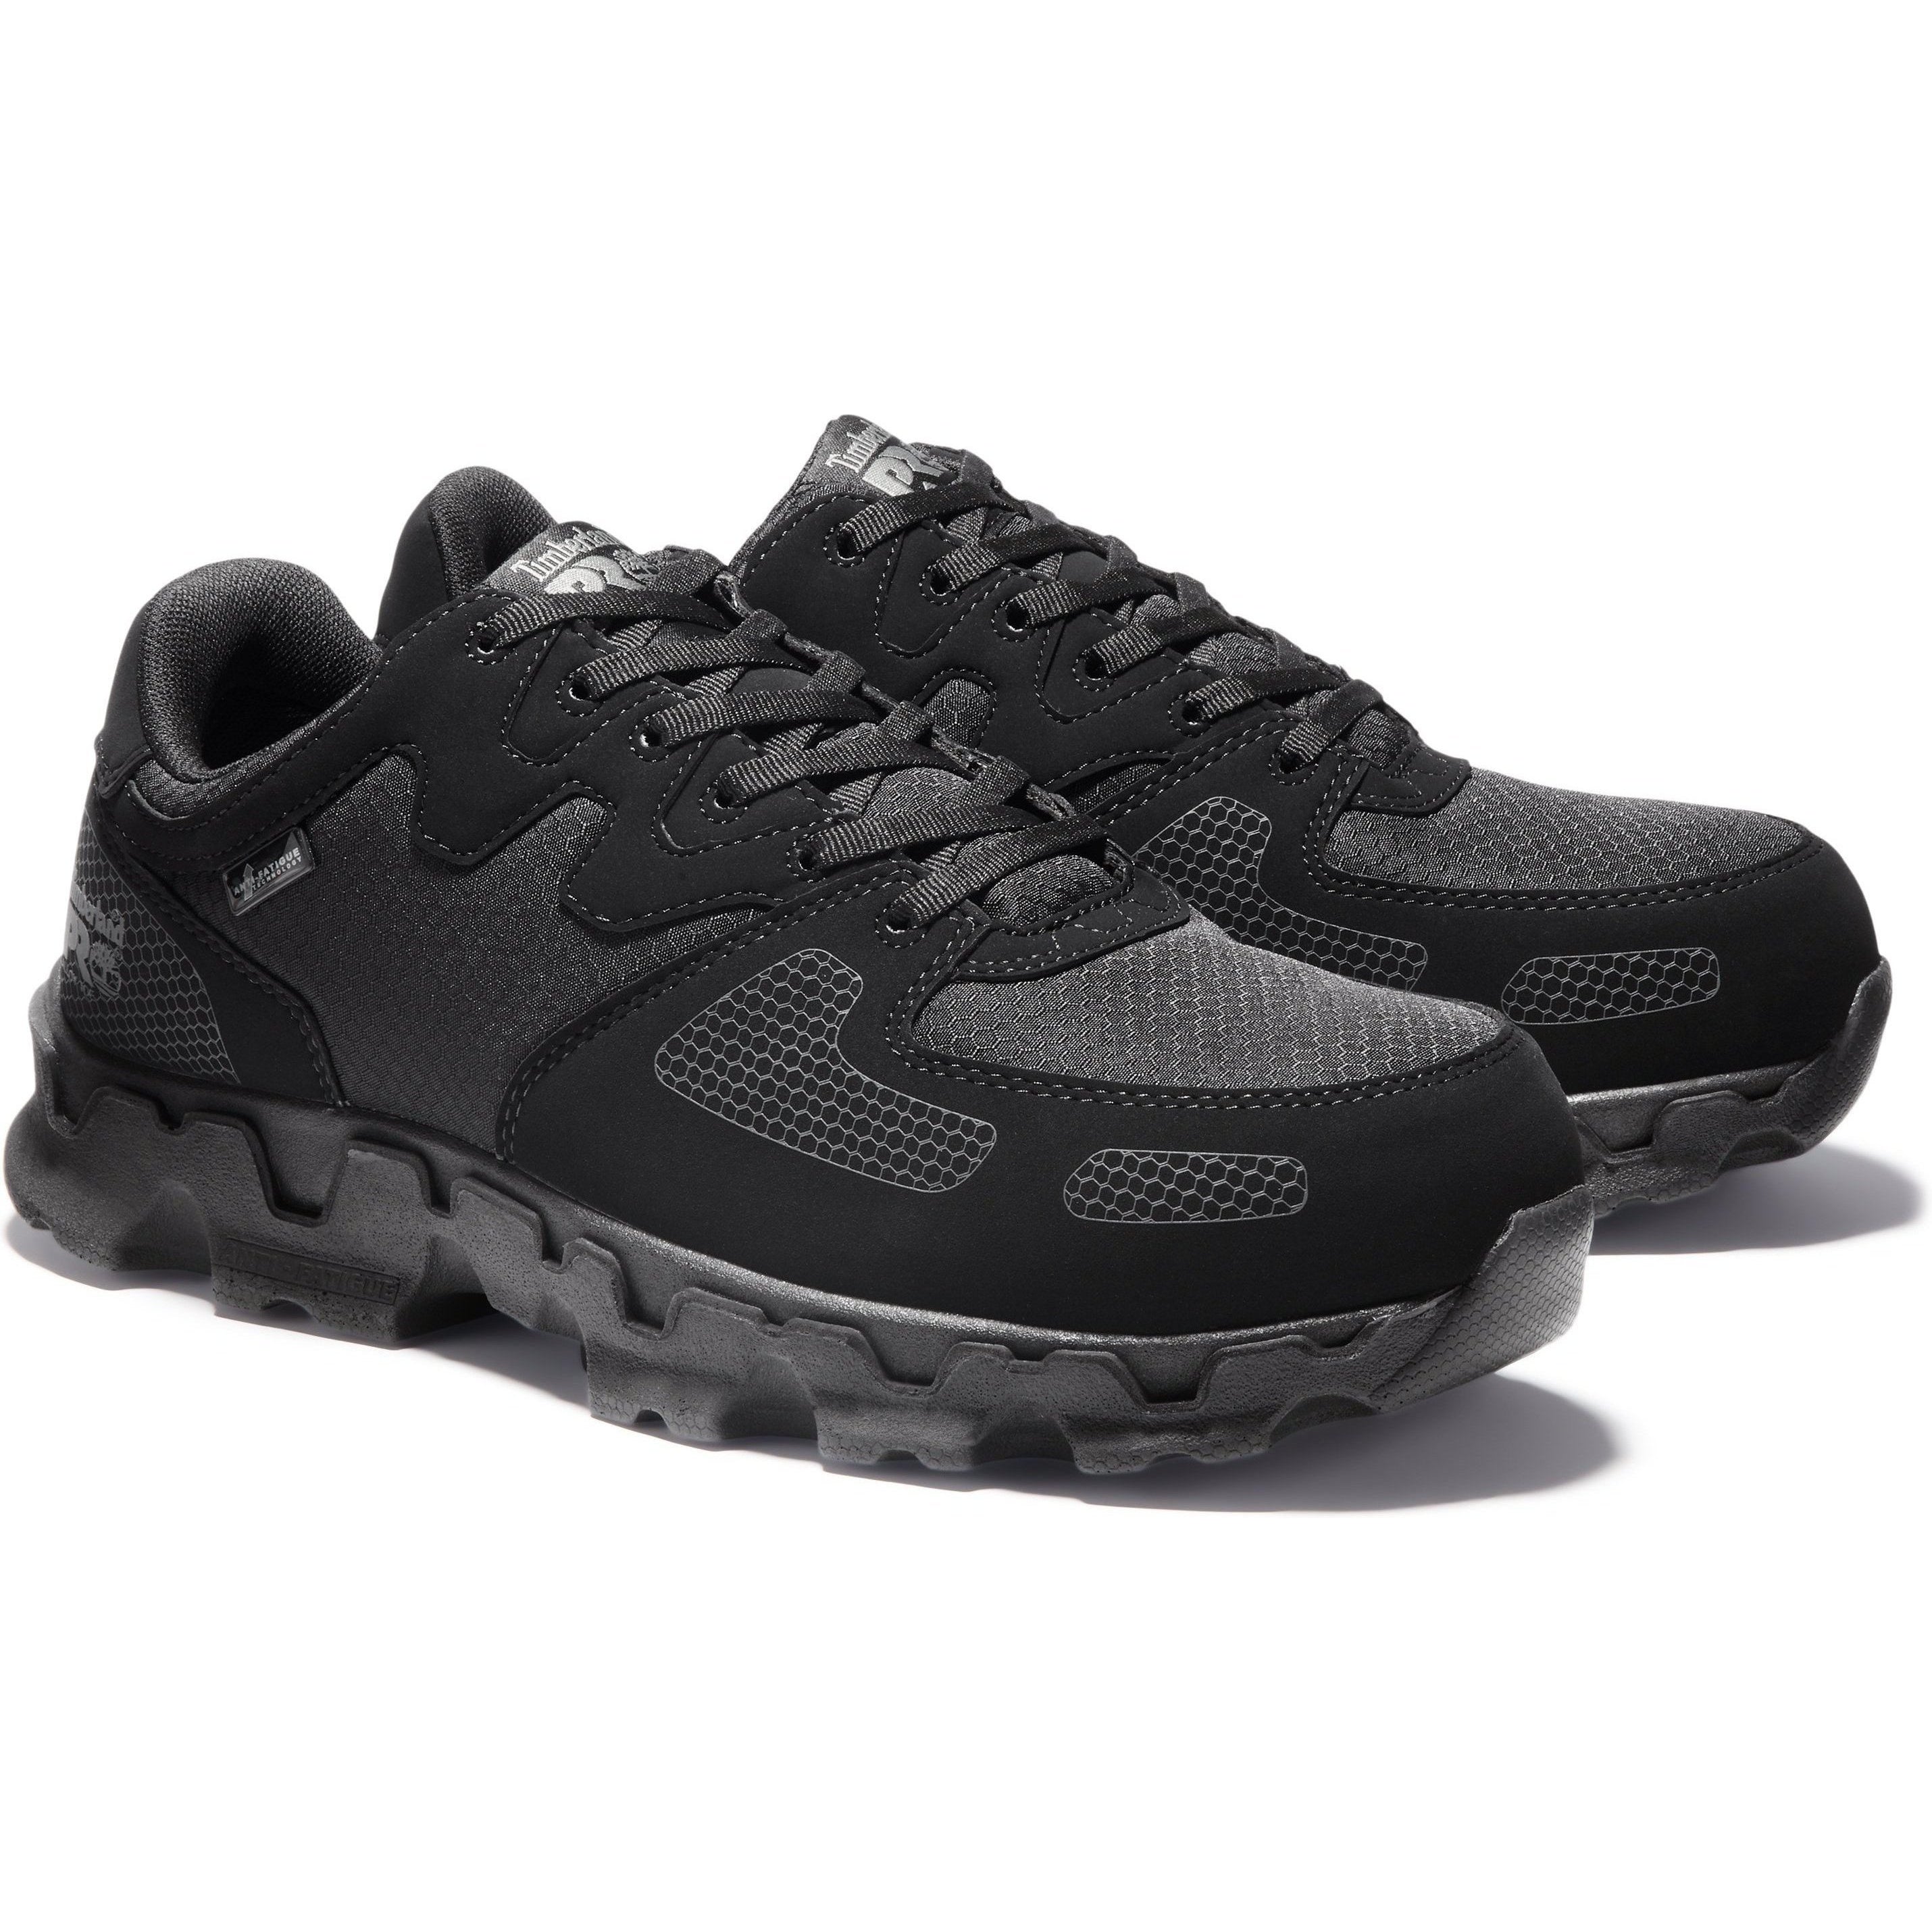 Timberland PRO Men's Powertrain Alloy Toe SD+ Work Shoe - TB1A16NN001 7 / Medium / Black Synthetic Nylon - Overlook Boots